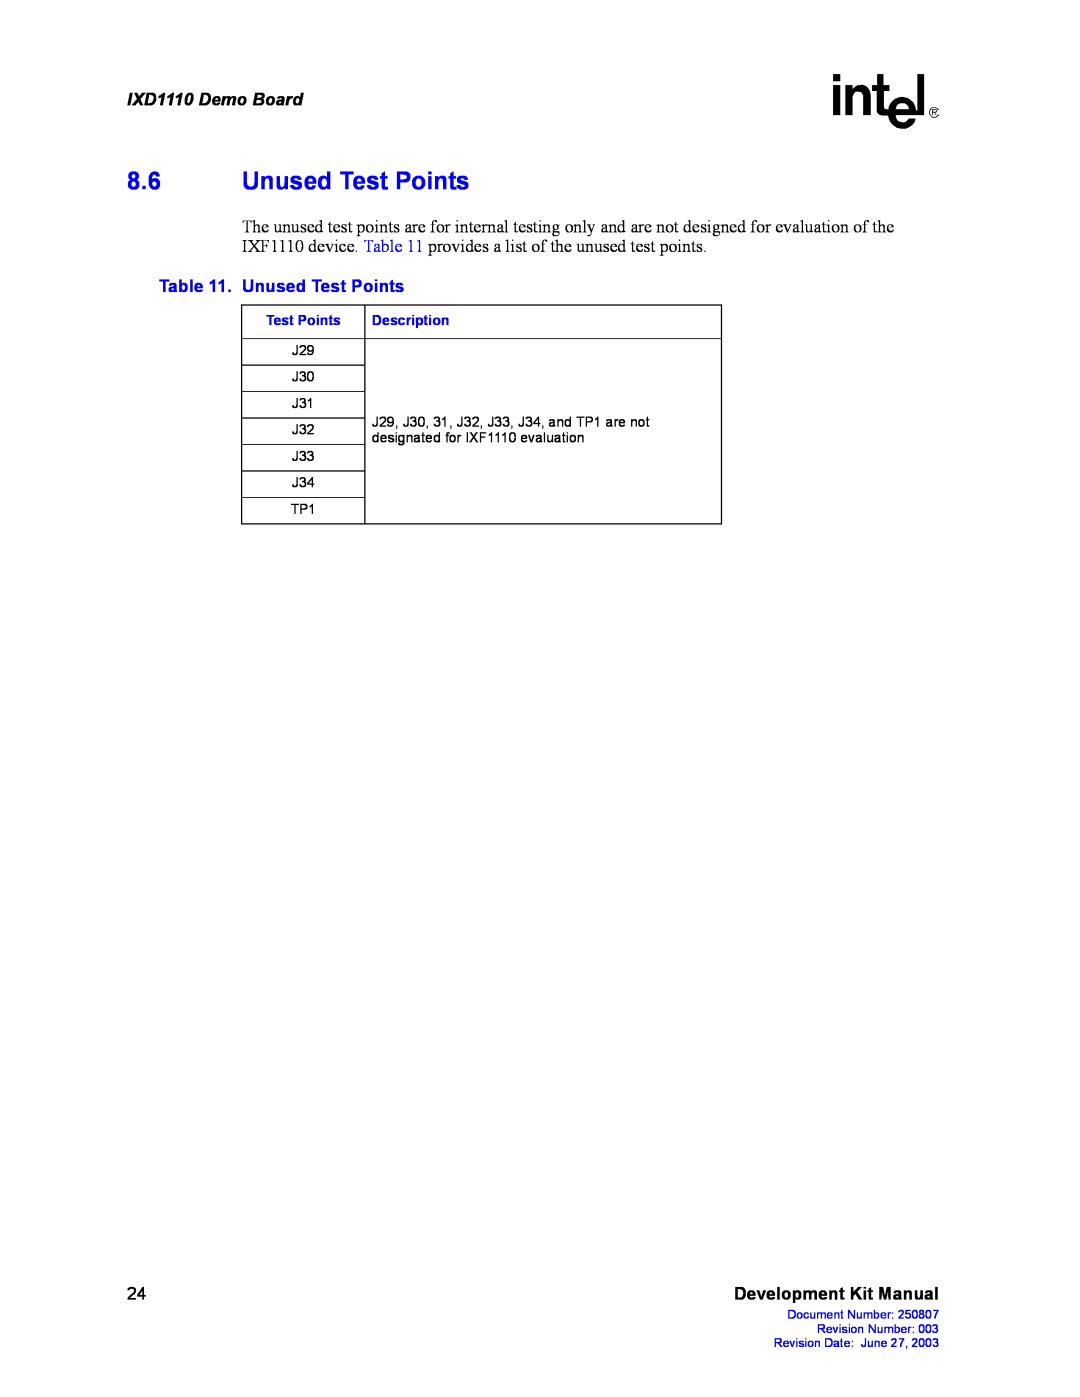 Intel manual Unused Test Points, IXD1110 Demo Board, Development Kit Manual 